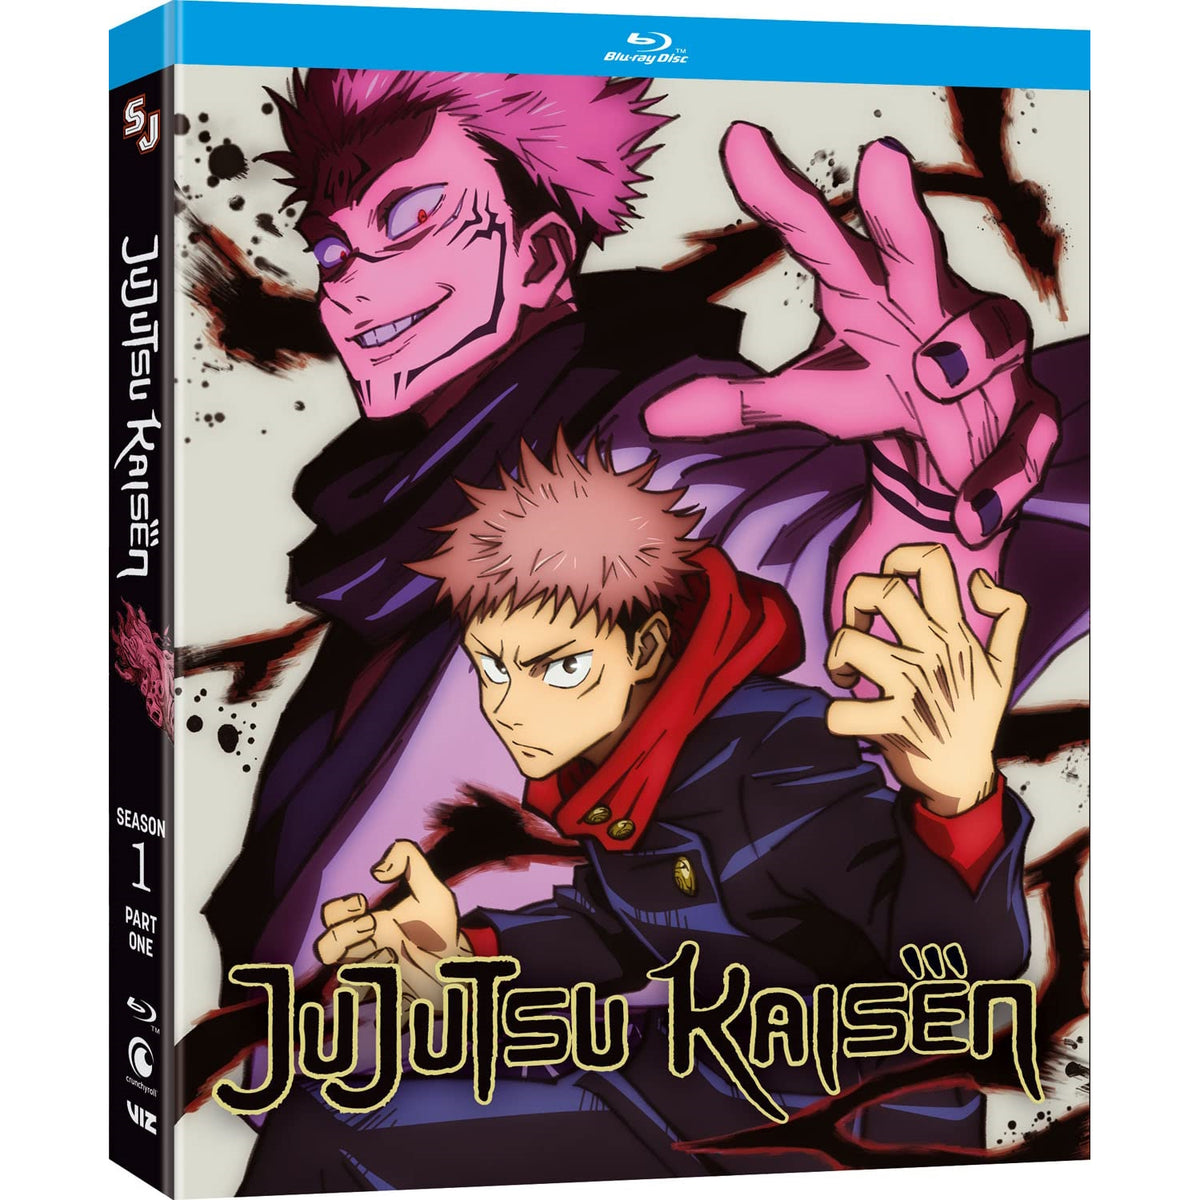 Soul Eater, Part 1 (episodes 1-13) anime DVD set